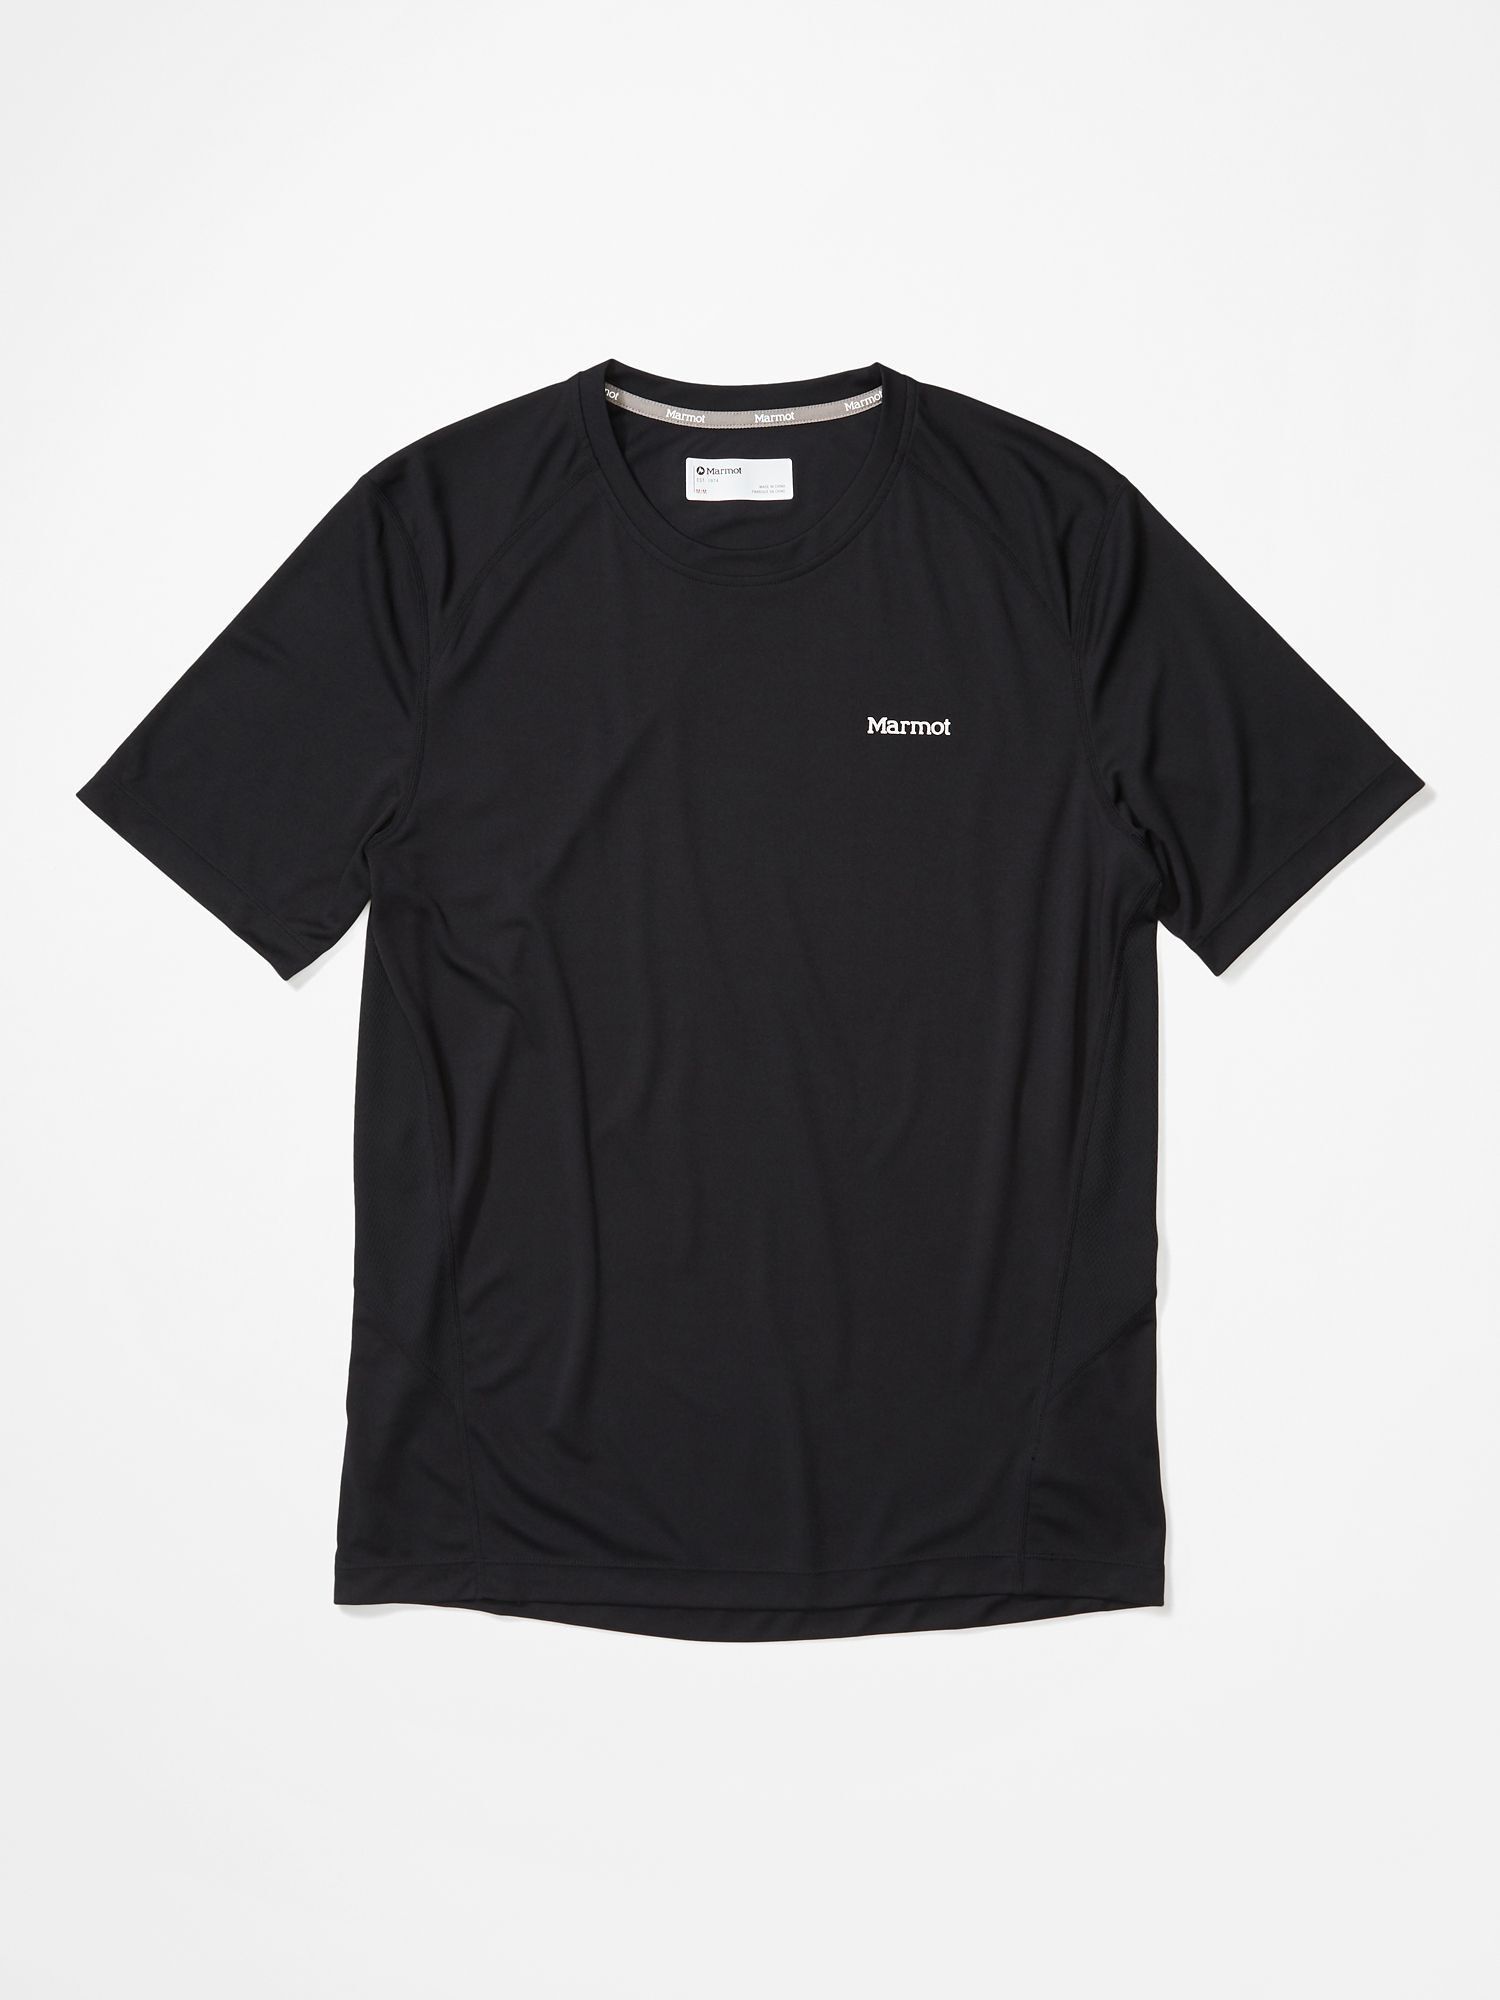 Marmot Windridge SS - T-shirt - Men's